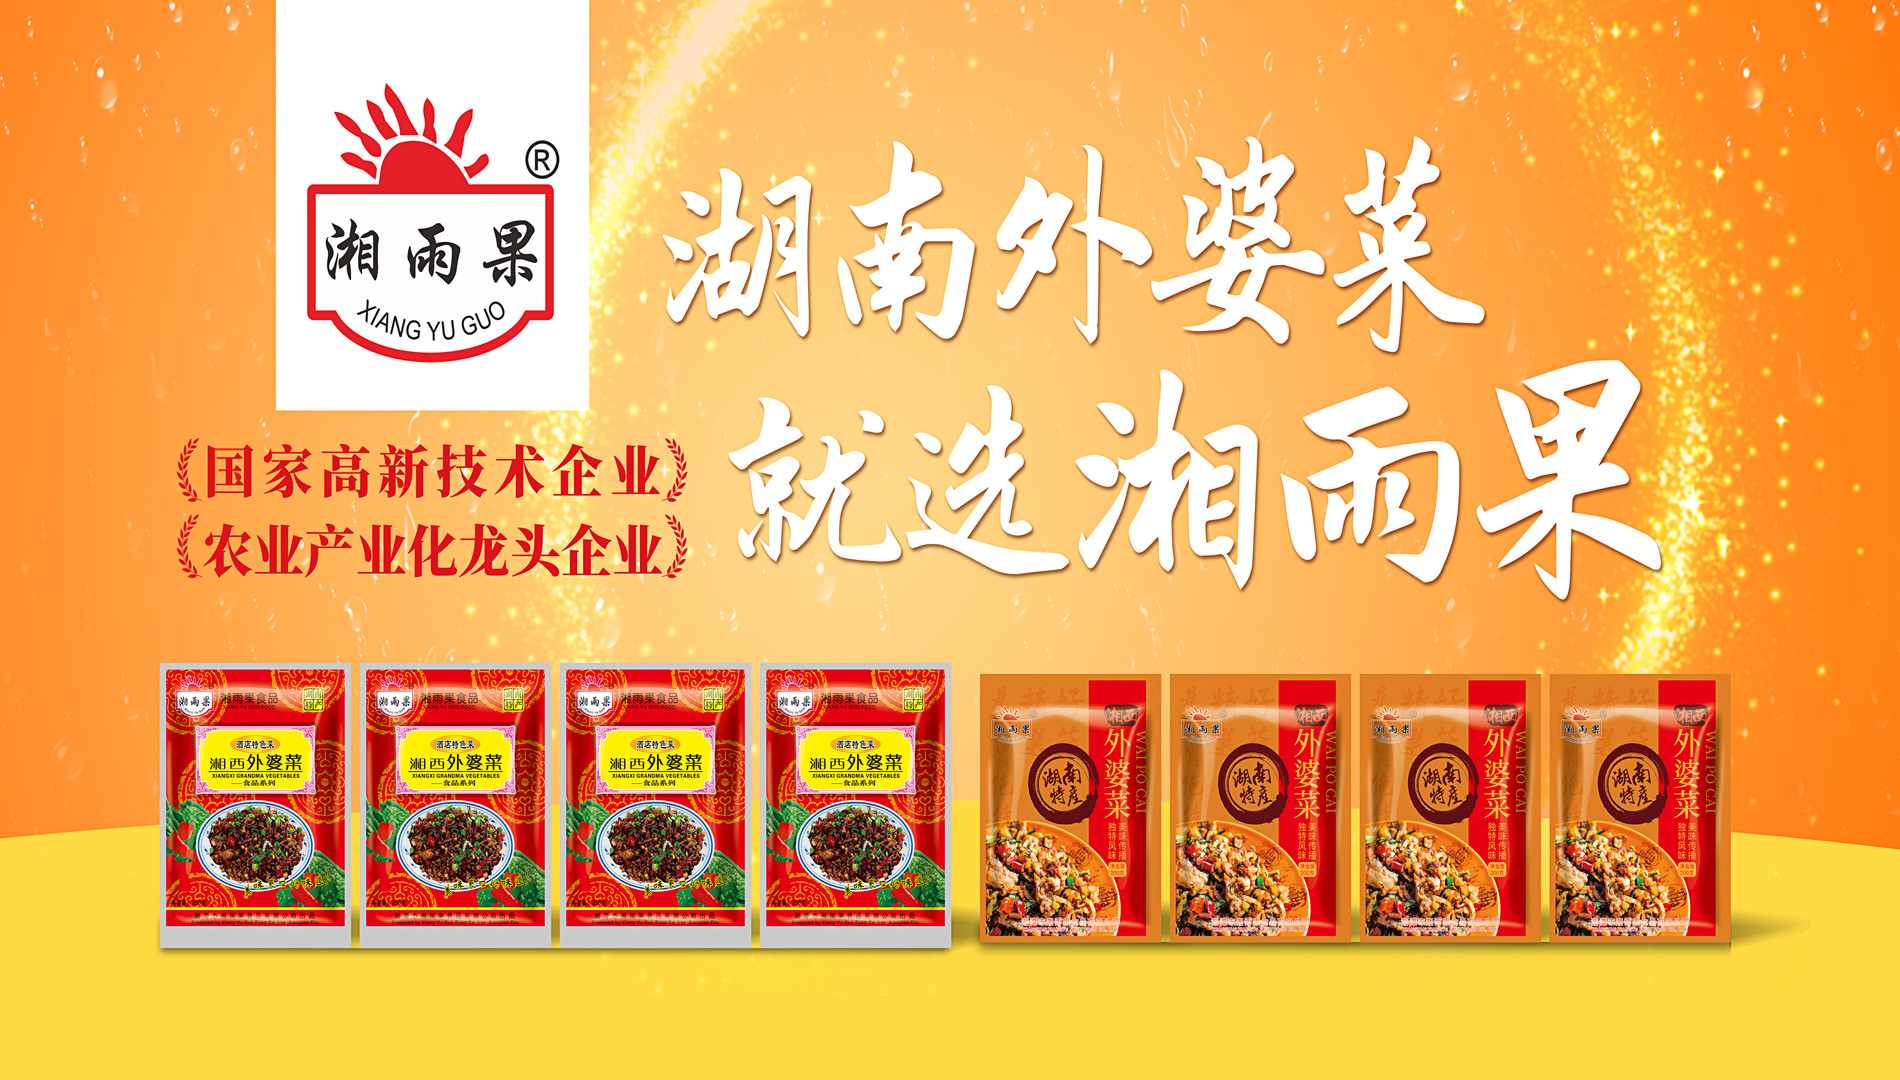 Xiang Yu Guo အစားအစာ—ကြိုတင်လုပ်ထားသော ပန်းကန်လုပ်ငန်း၏ စံသတ်မှတ်ချက်လုပ်ငန်း